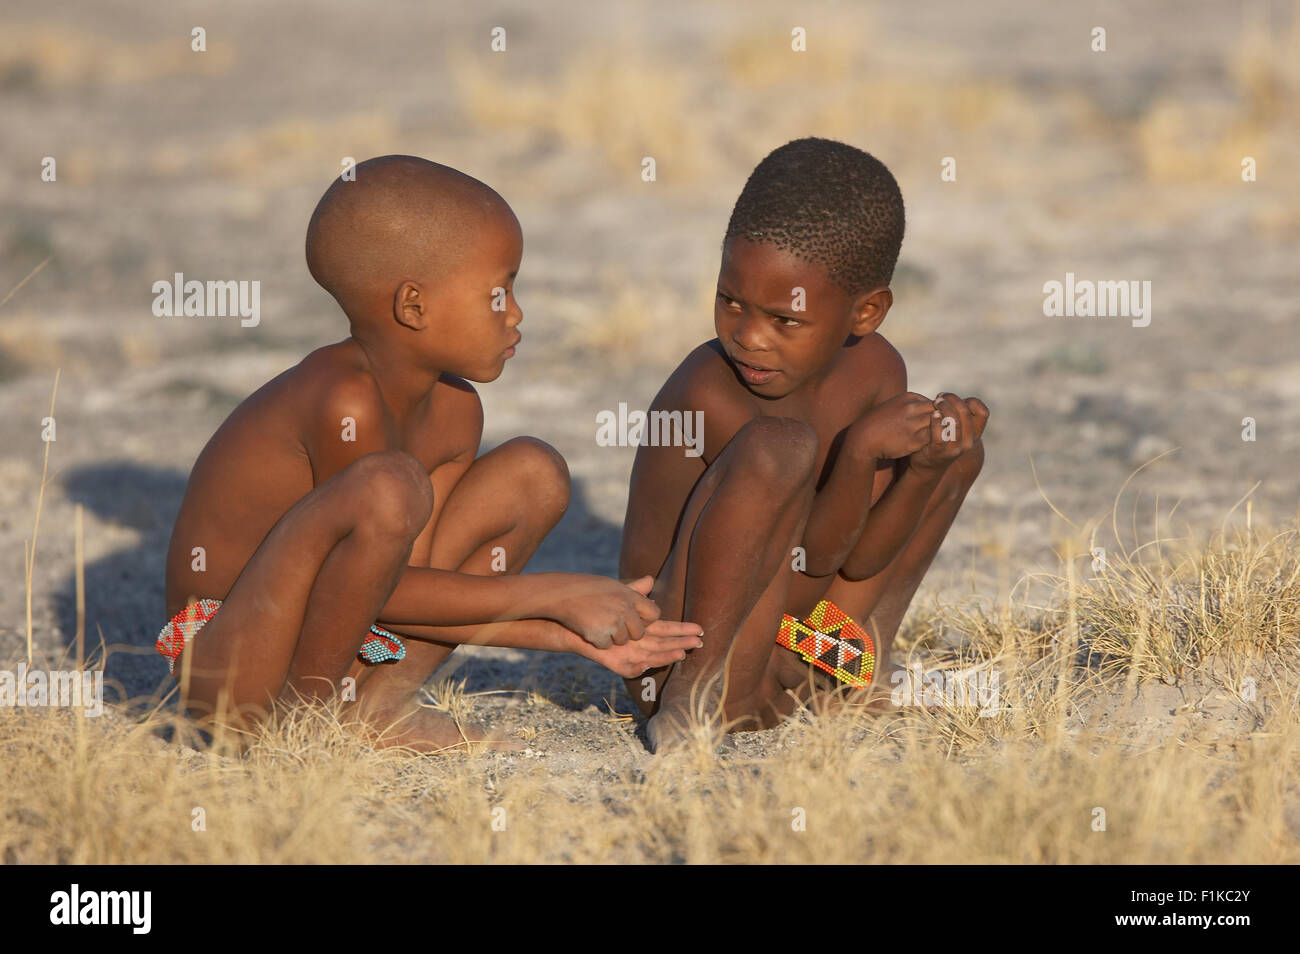 Bushman children Stock Photo